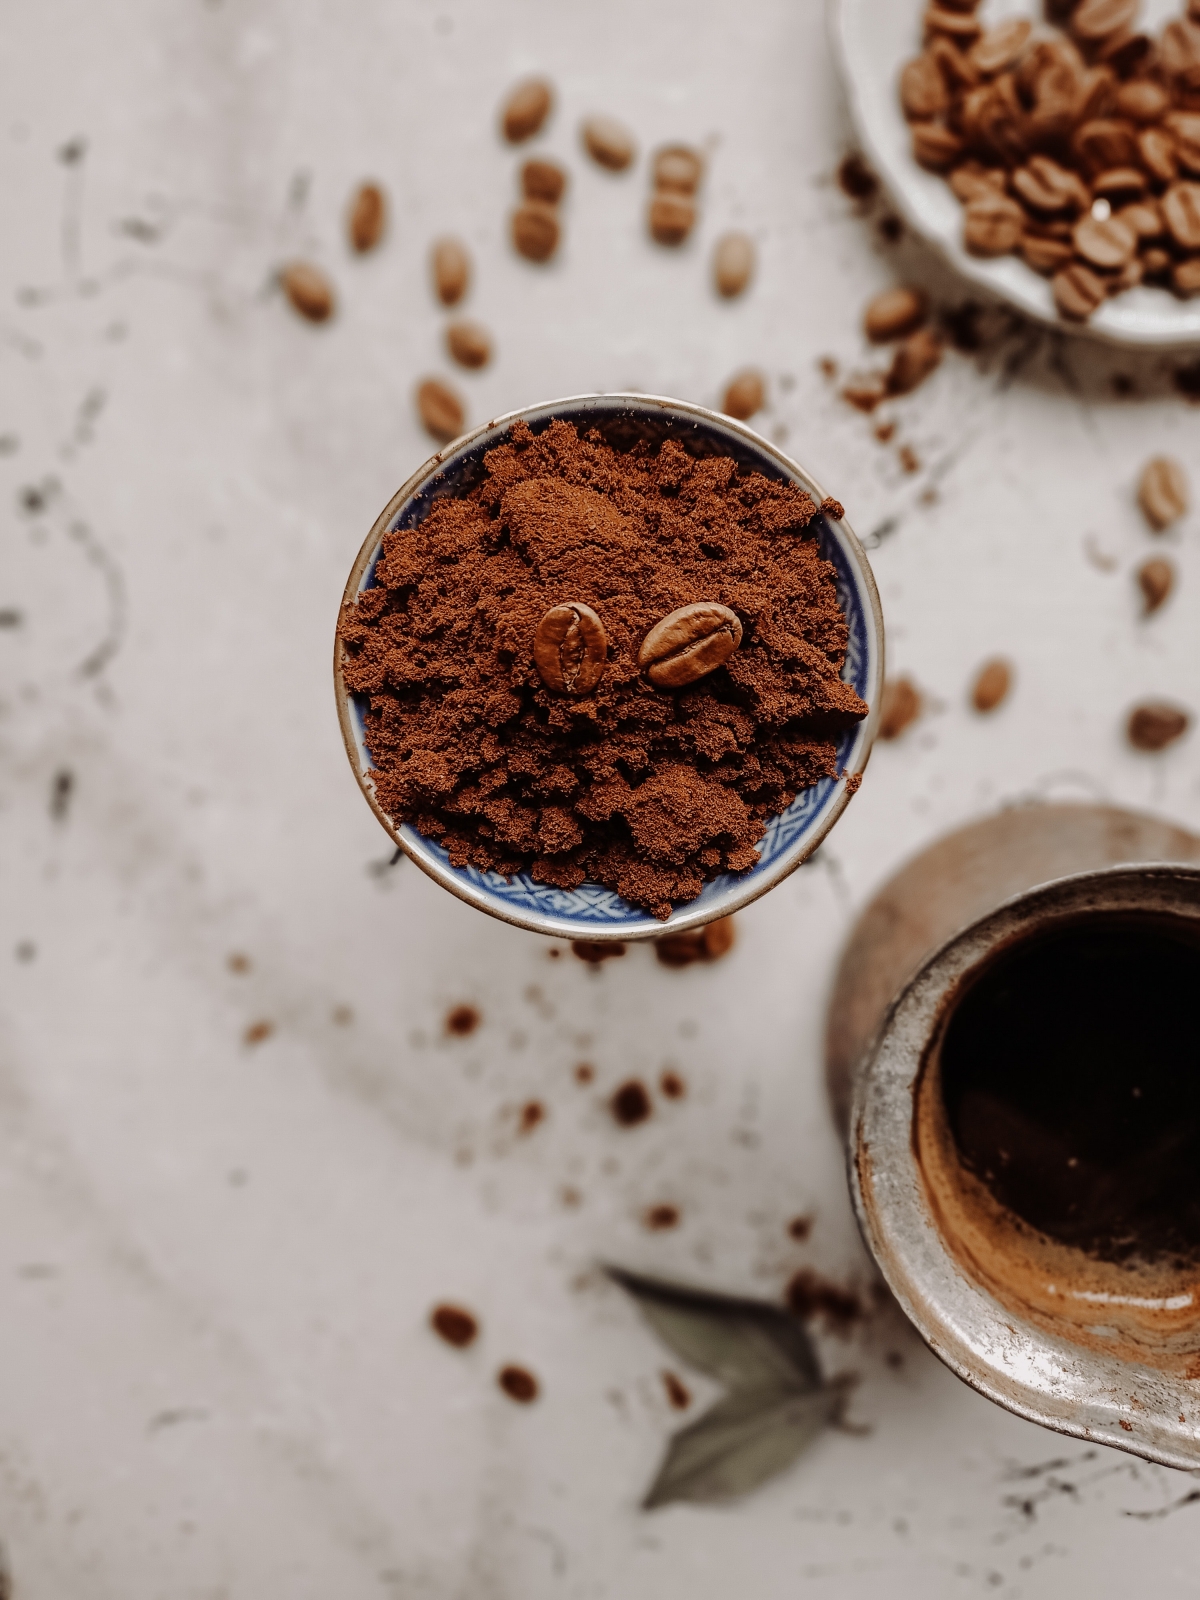 10 Random Uses of Coffee Grounds to Make Your Life Easier